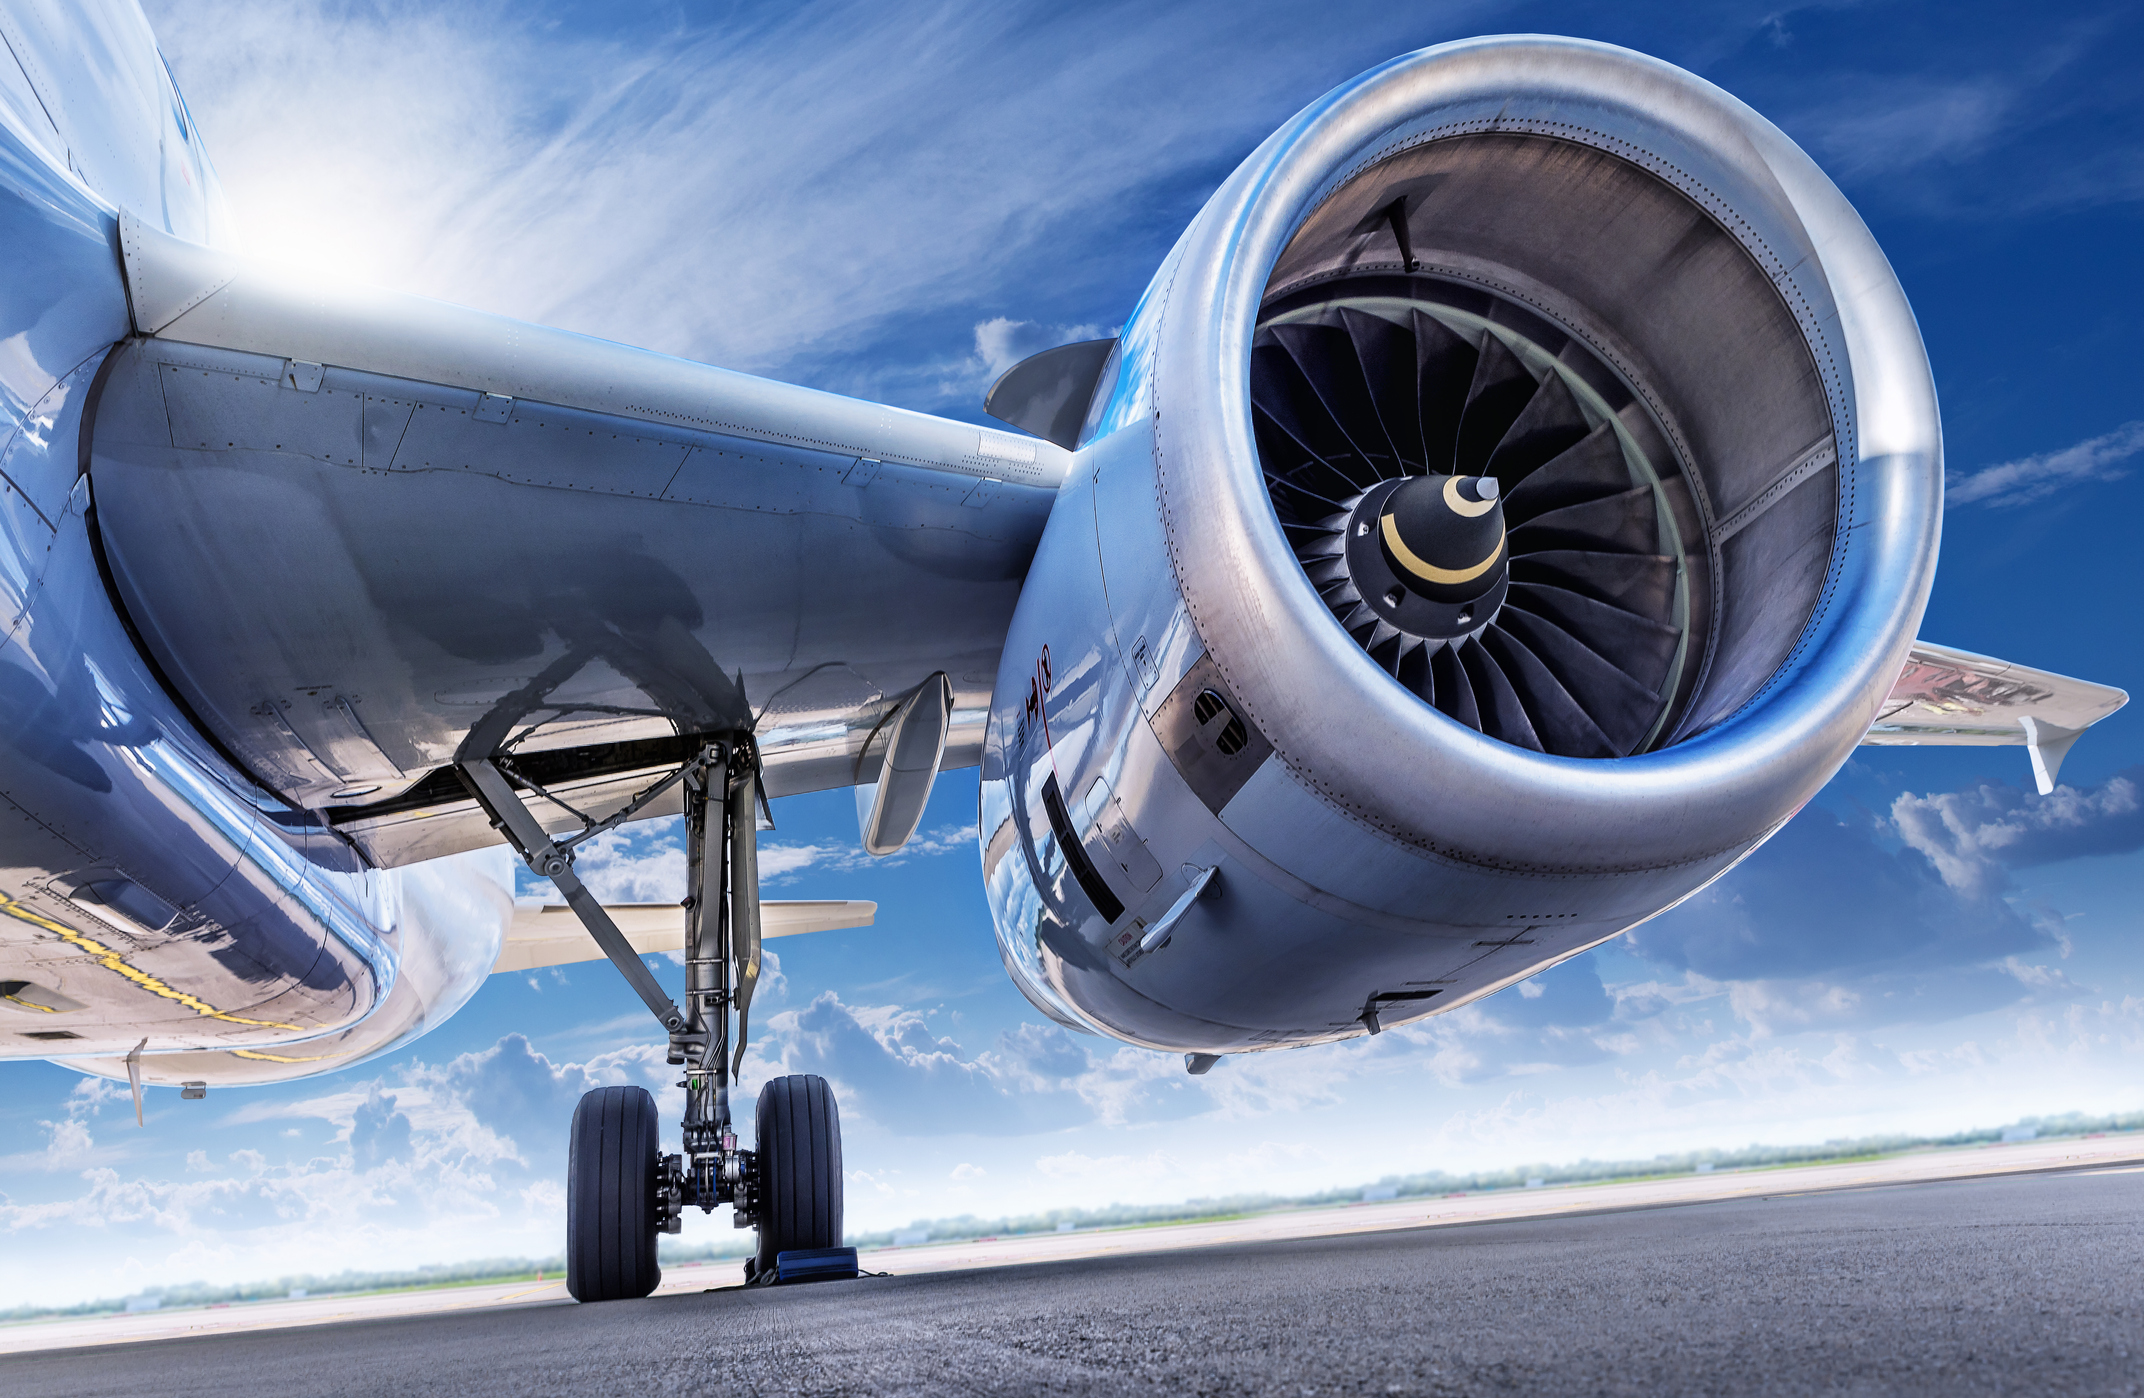 additive molding improves airplane design